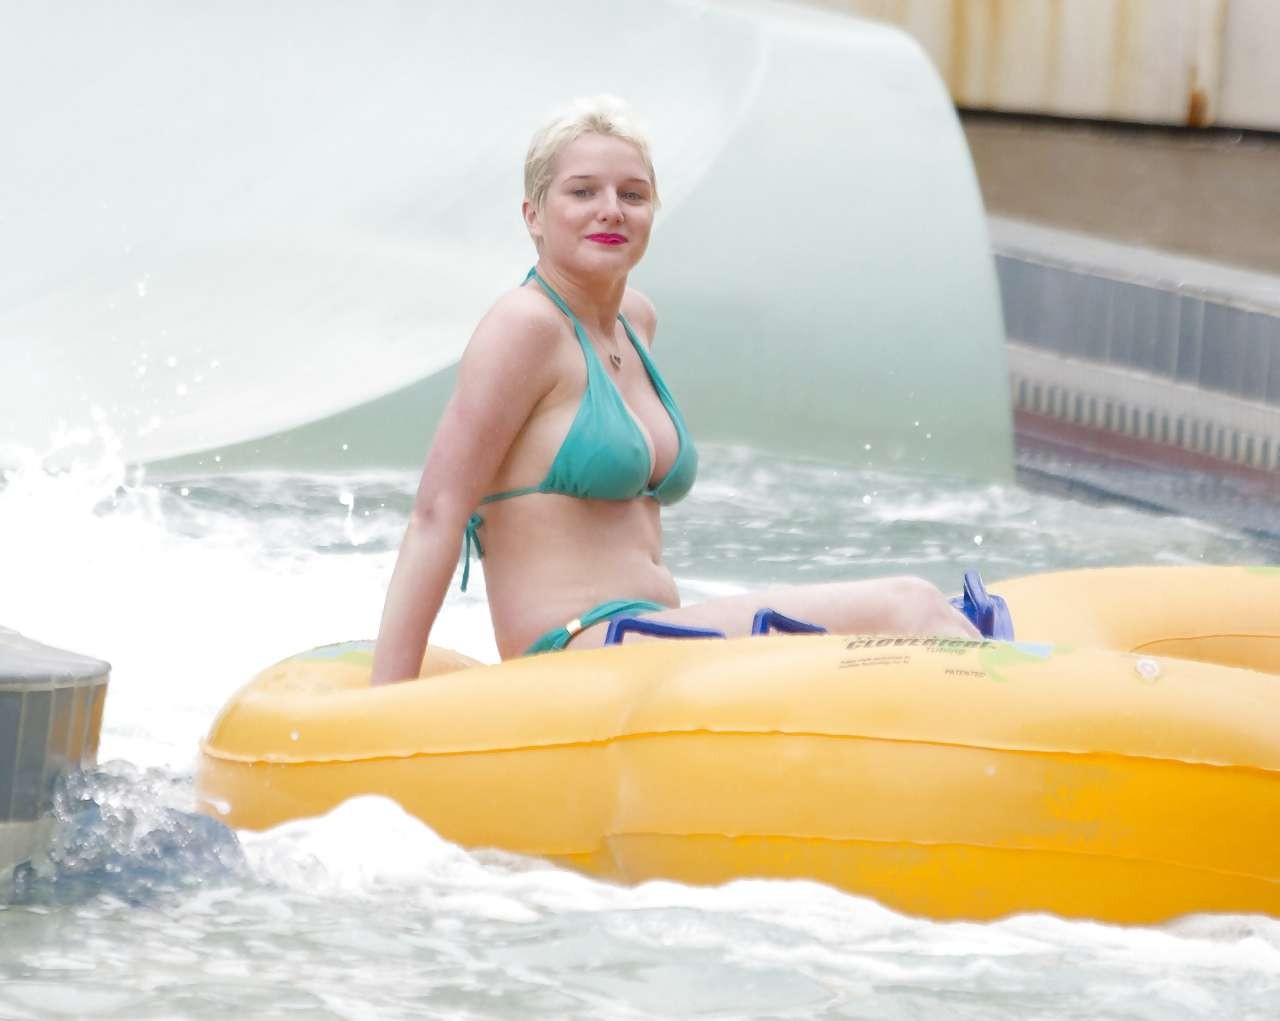 Helen Flanagan hint of nipple slip in blue bikini on beach paparazzi pictures #75294857